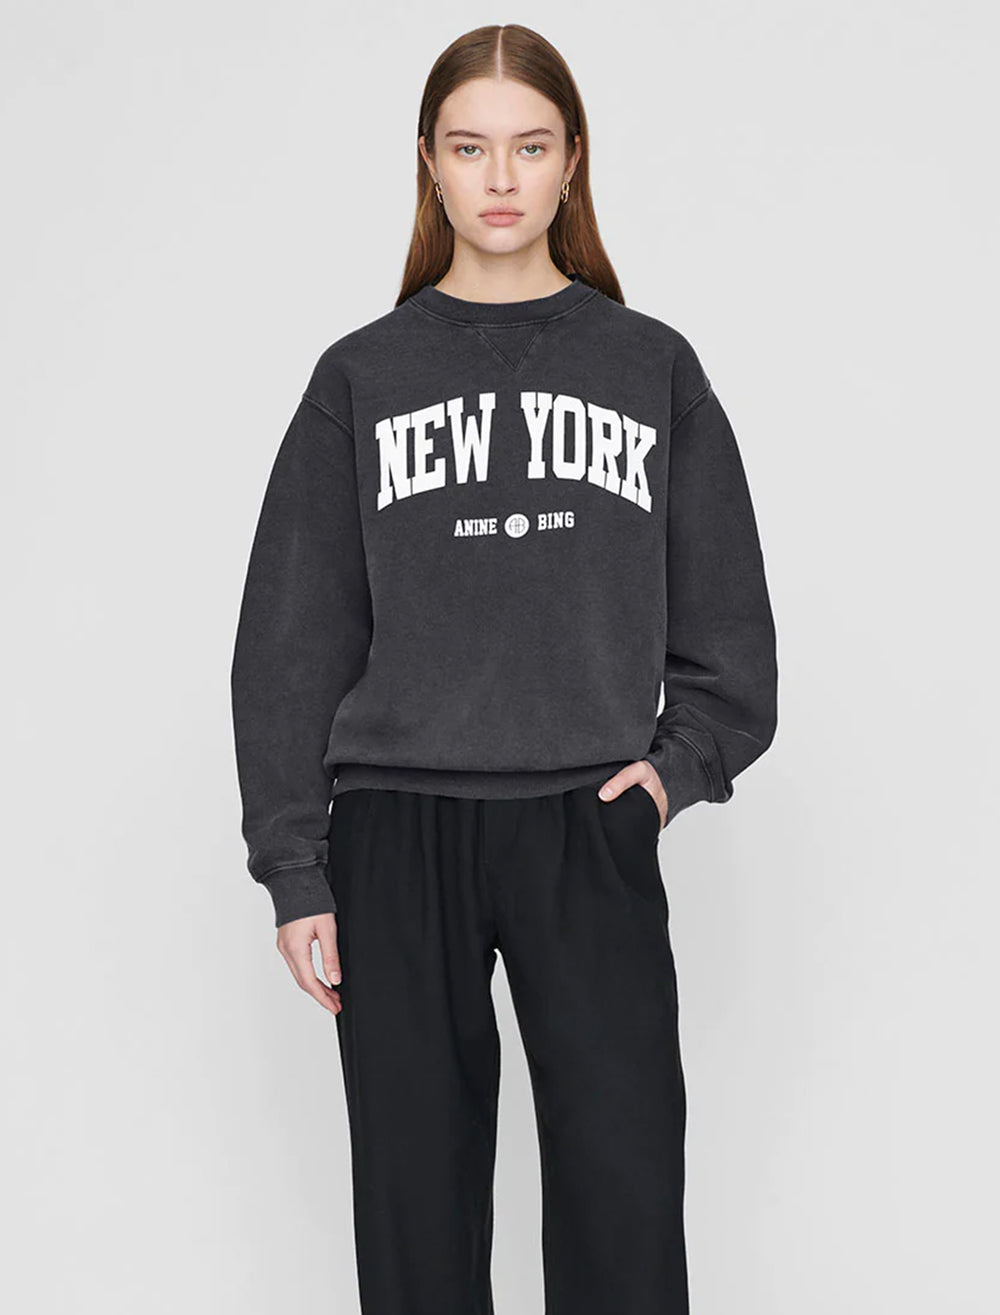 Model wearing Anine Bing's new york ramona sweatshirt in washed black.